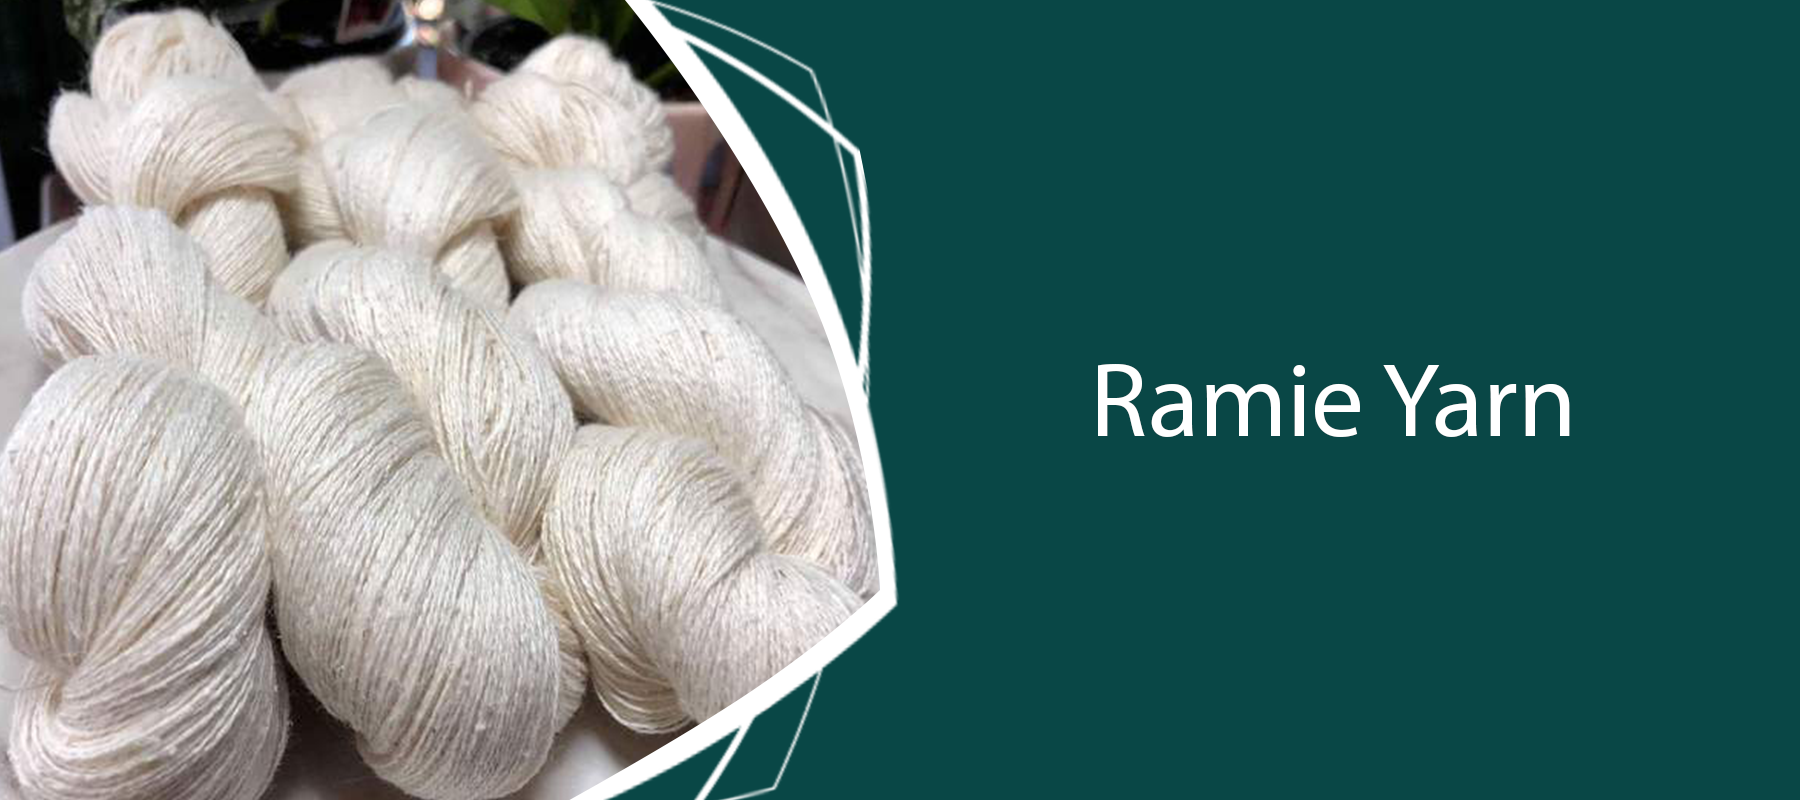 Ramie Yarn (Nettle Yarn): Weaving and Basketry